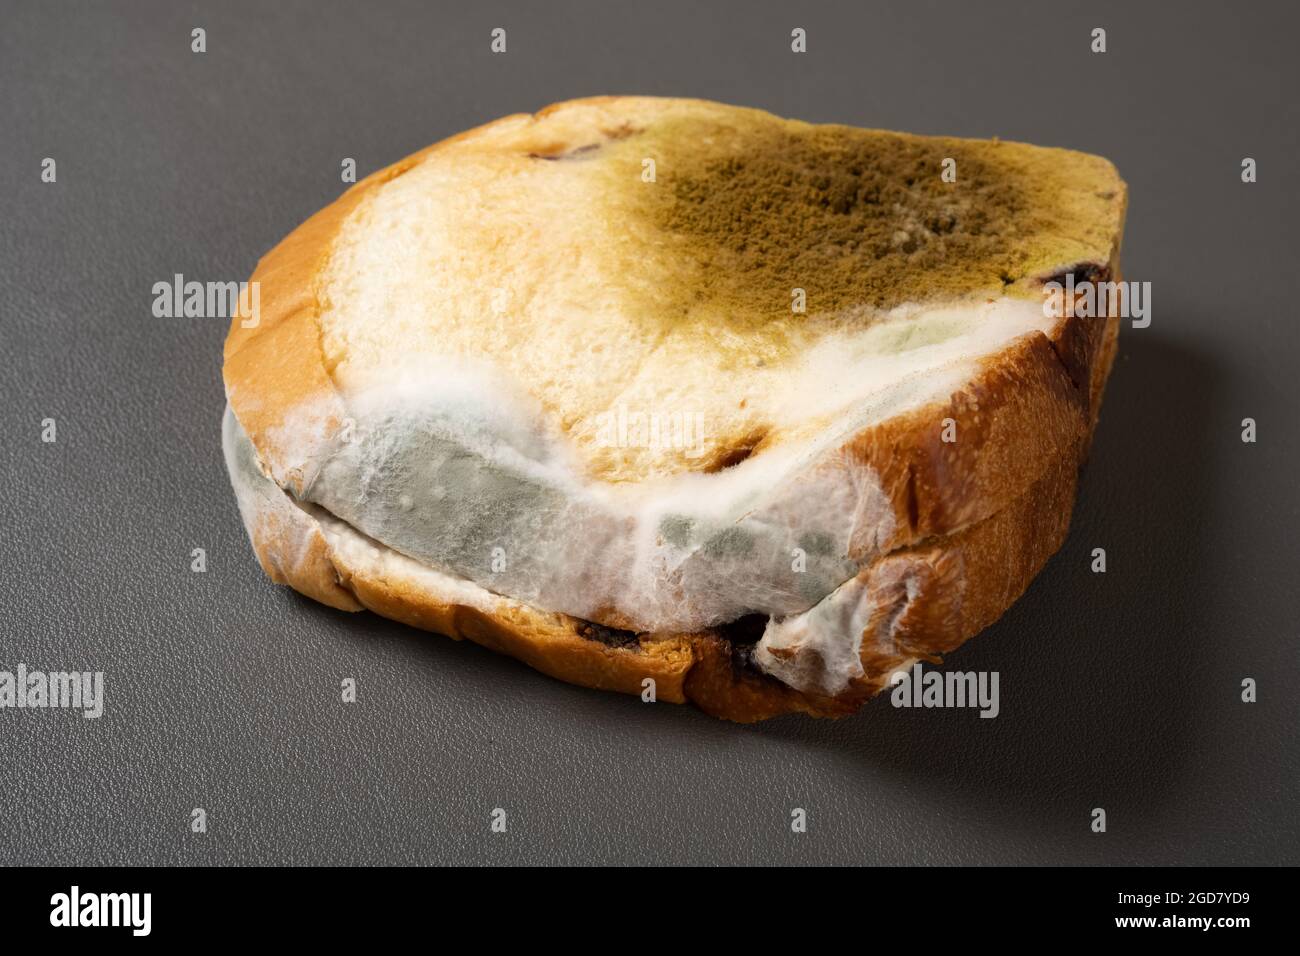 https://c8.alamy.com/comp/2GD7YD9/angle-view-moldy-bread-on-a-dark-background-2GD7YD9.jpg